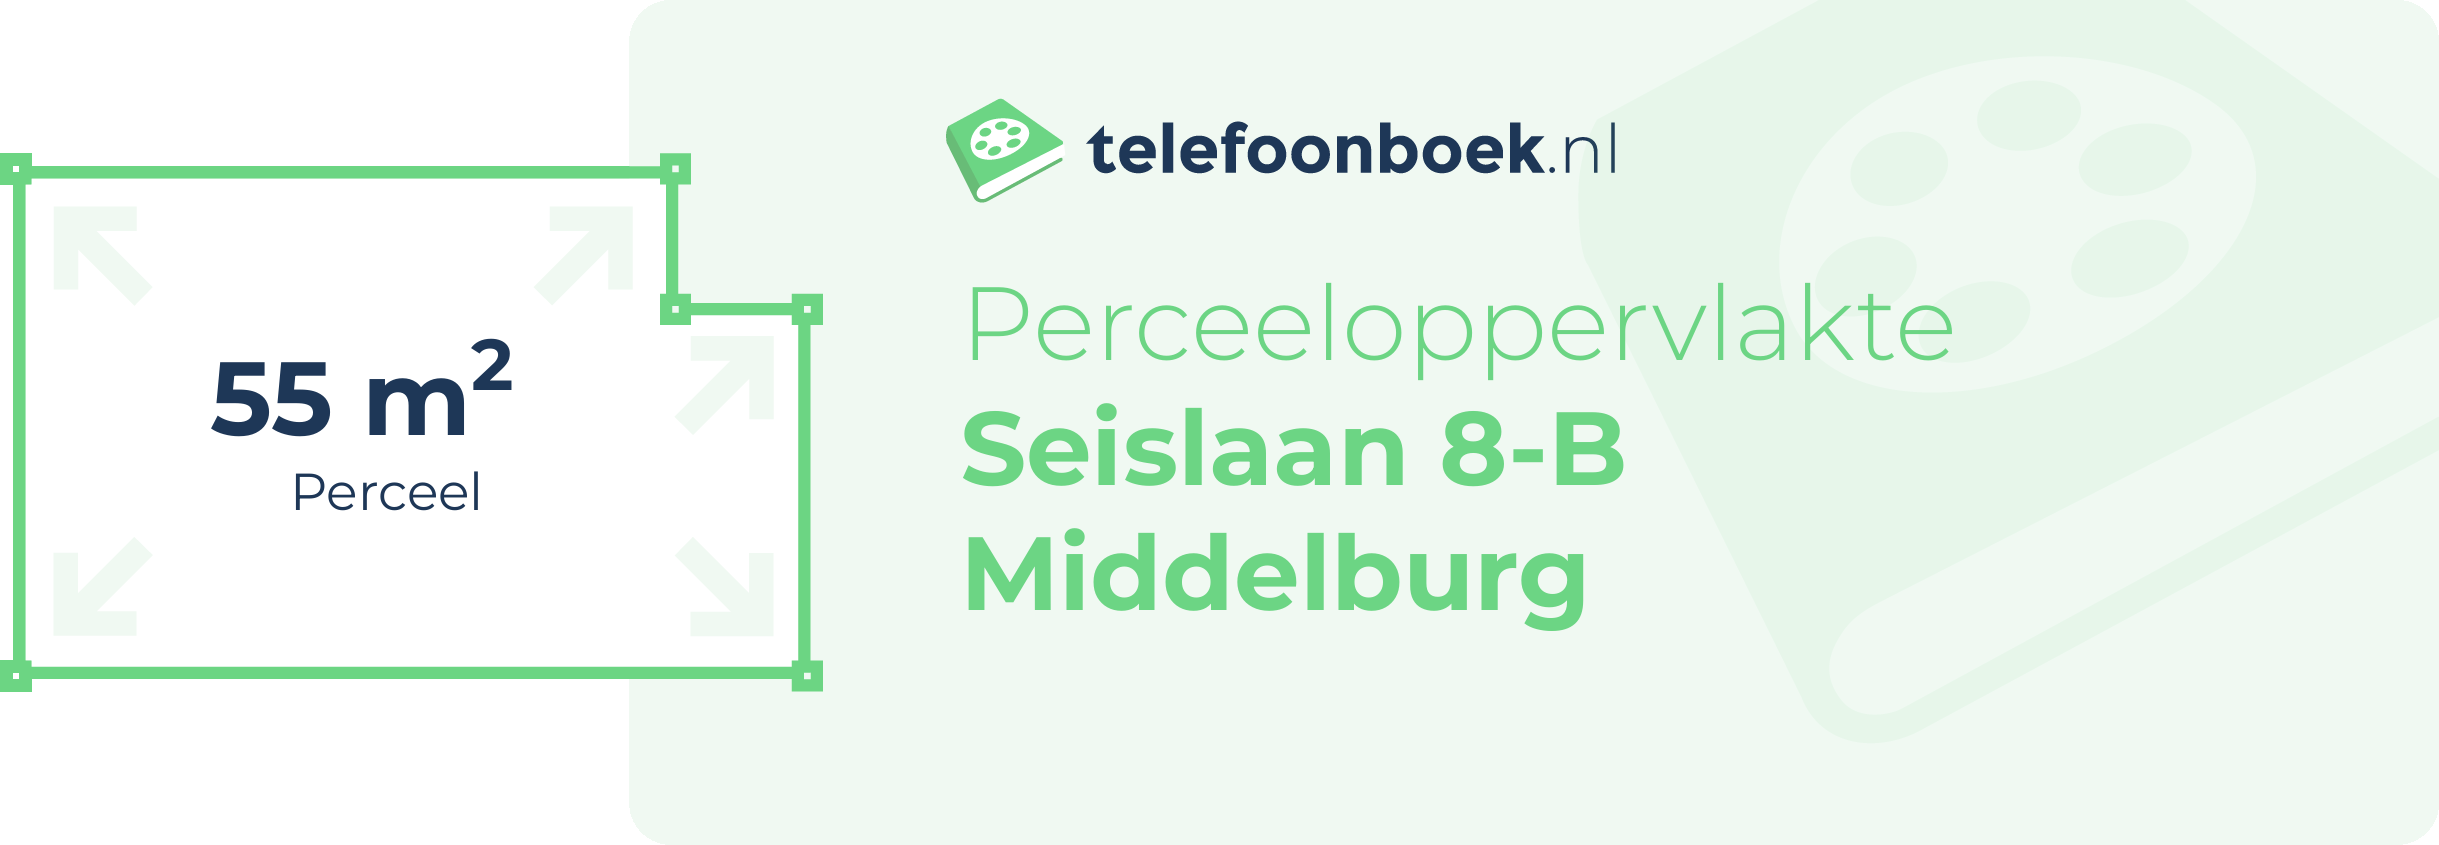 Perceeloppervlakte Seislaan 8-B Middelburg